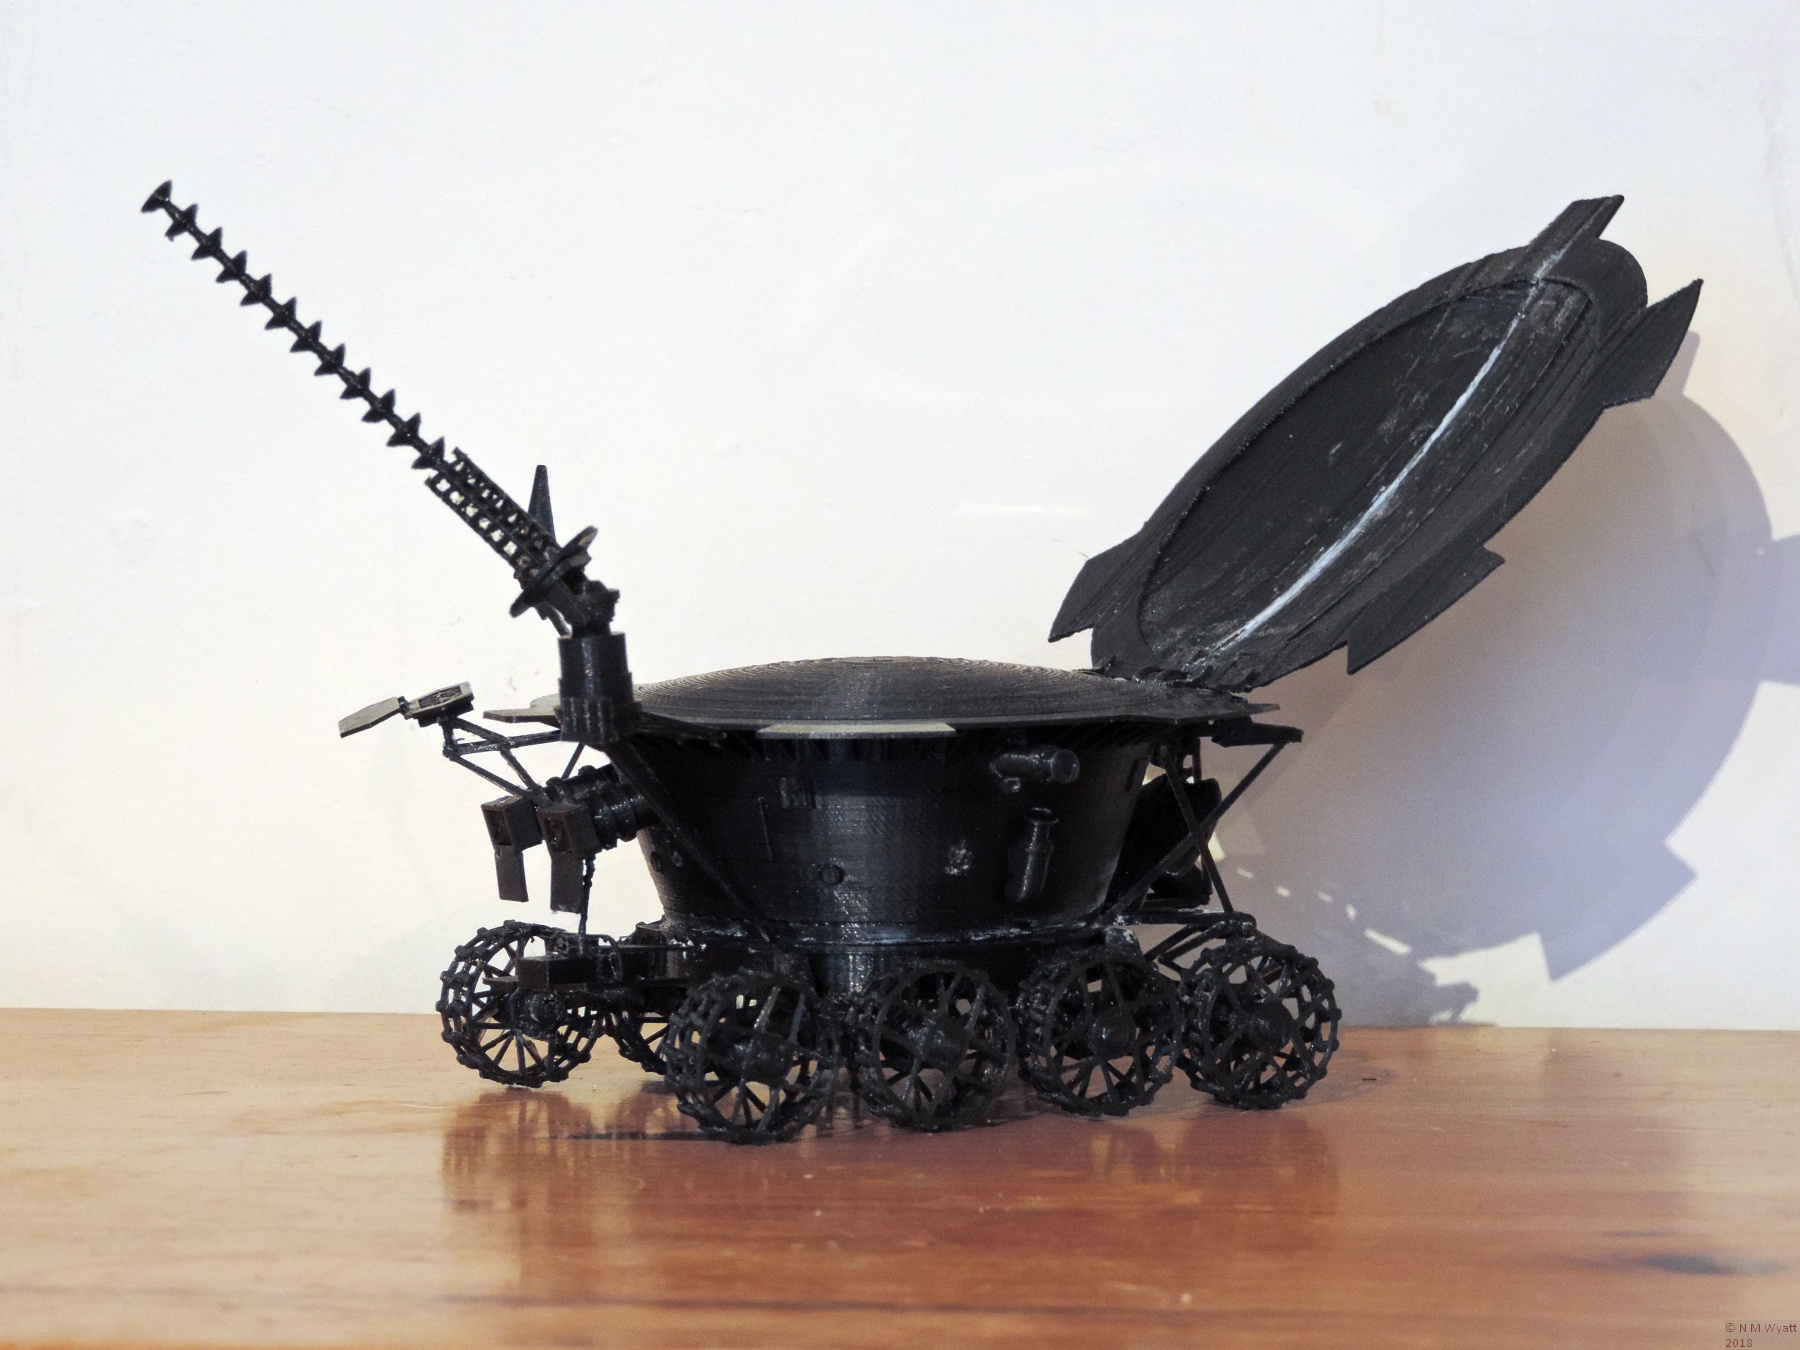 £D printed model of Lunokhod 1